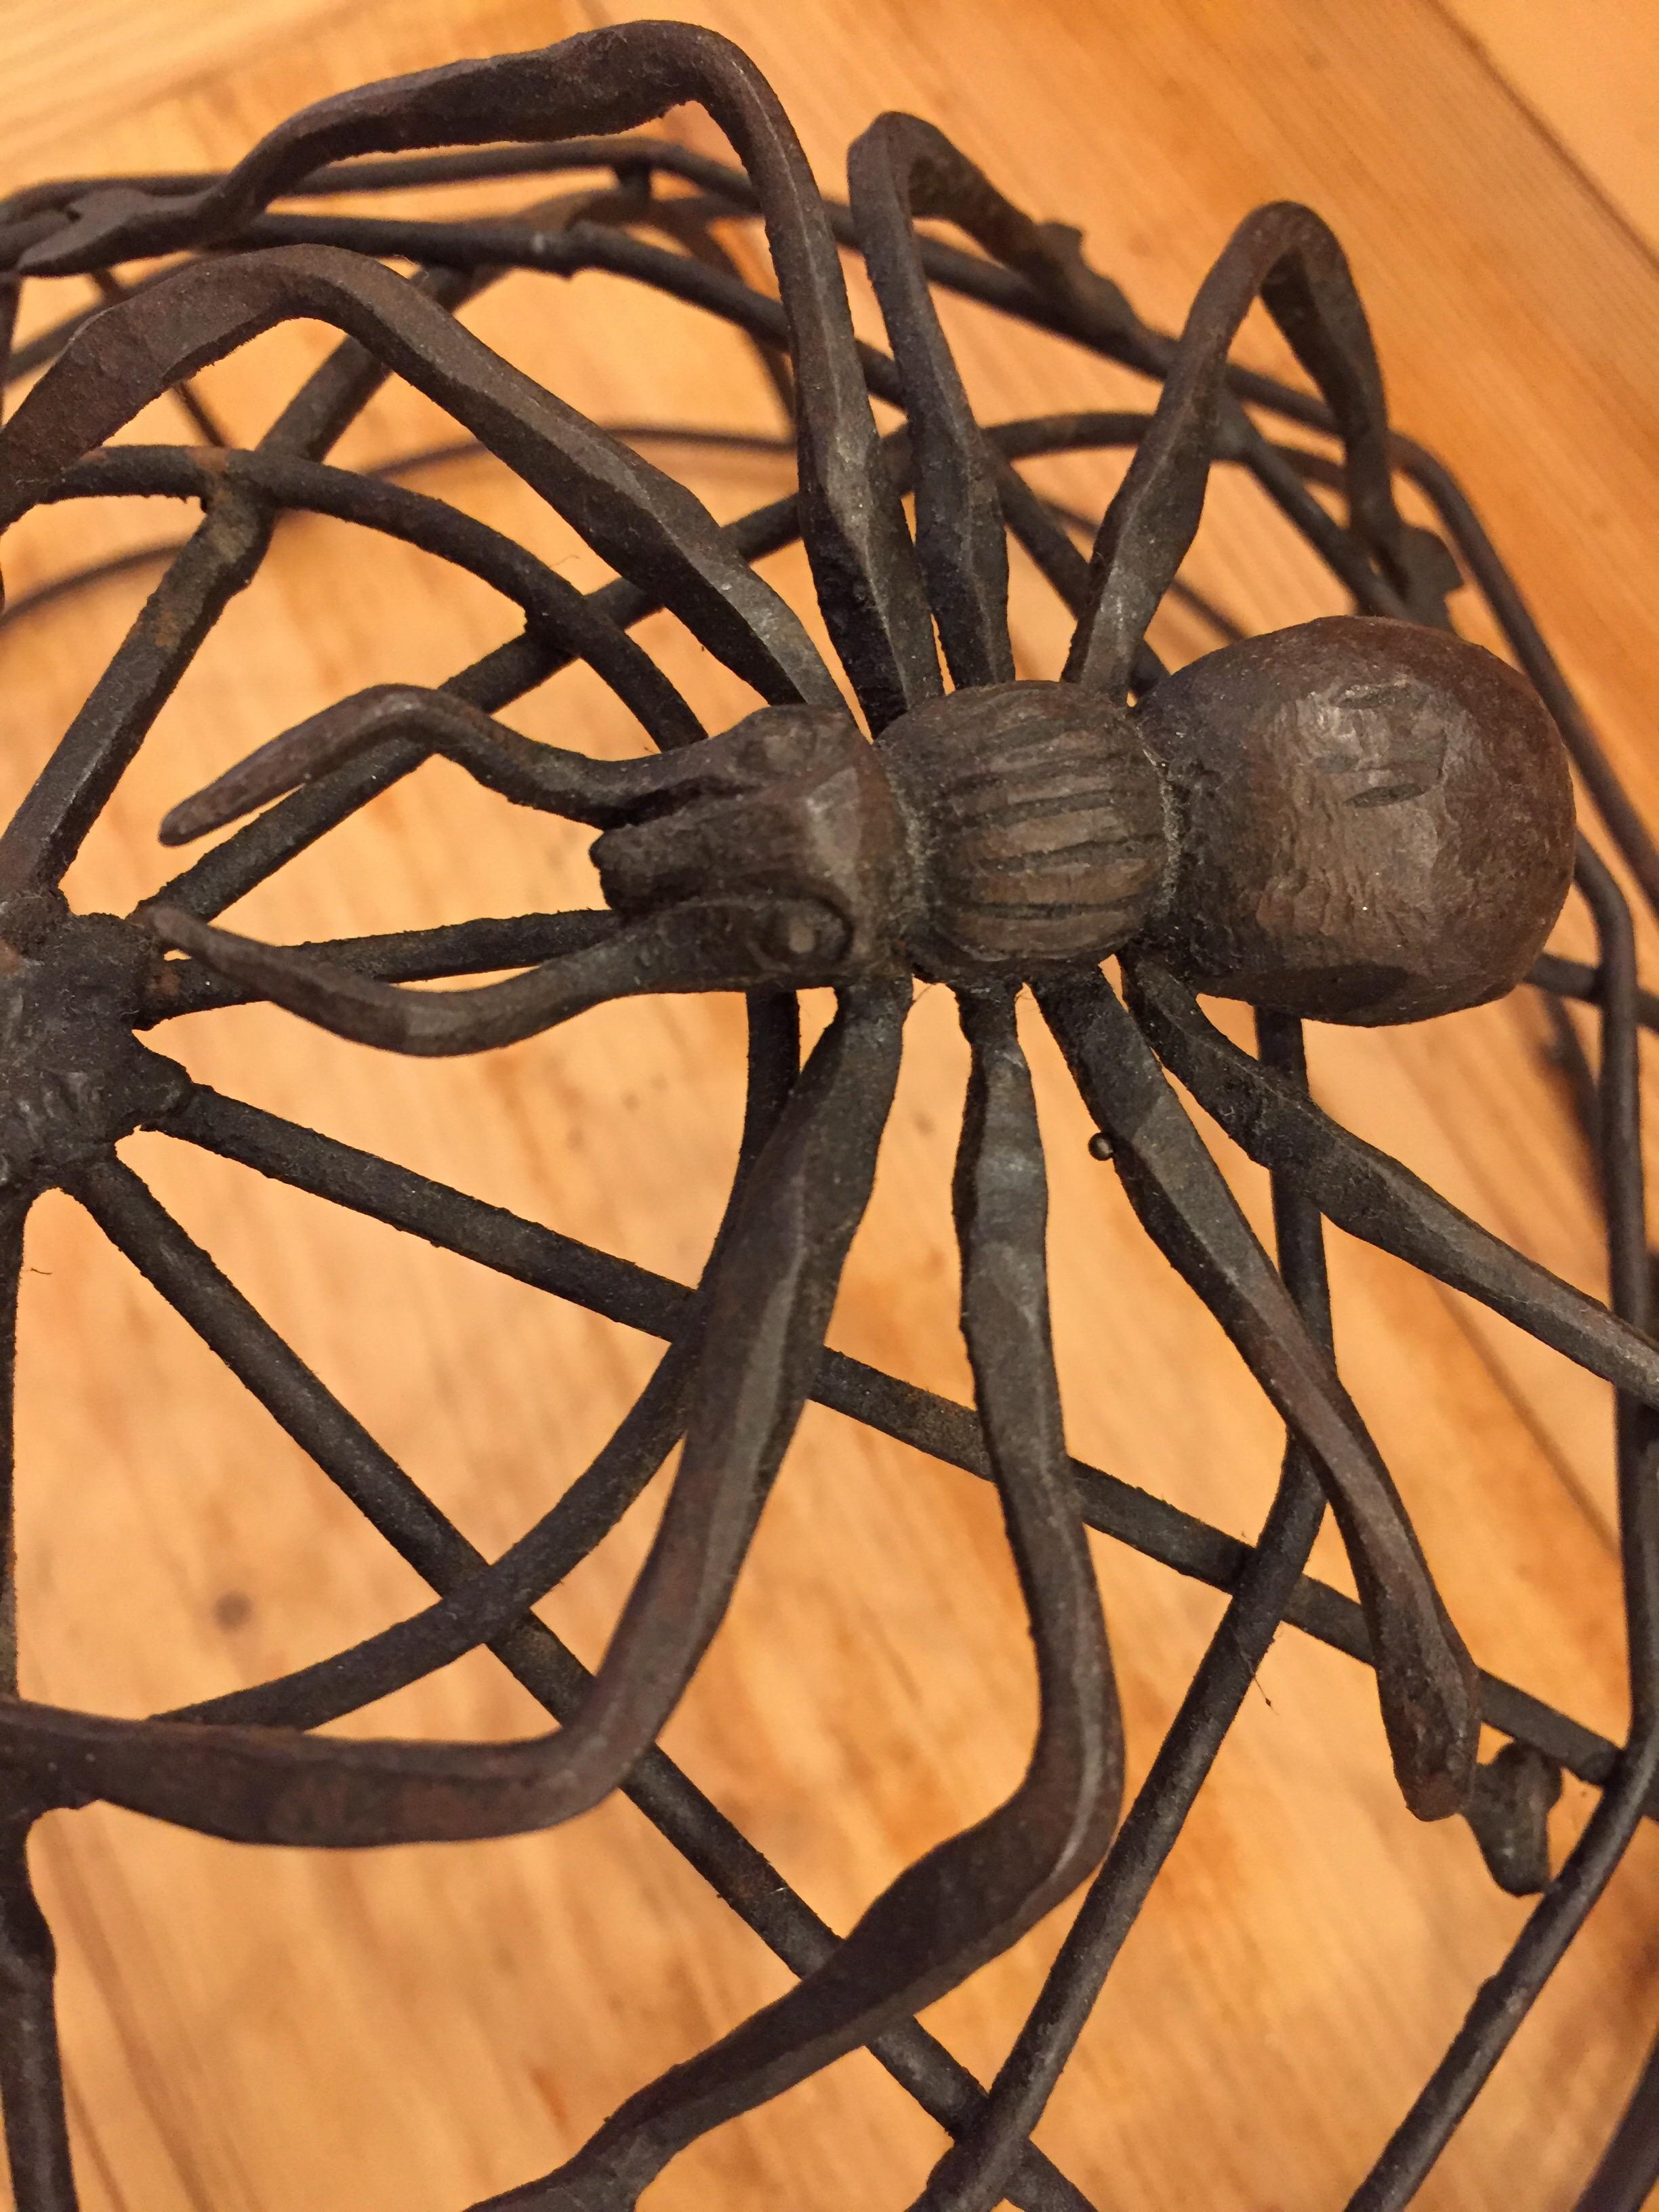 Spider Web Wrought Iron Ceiling Light 20th Century Italian Circular Sconce 3